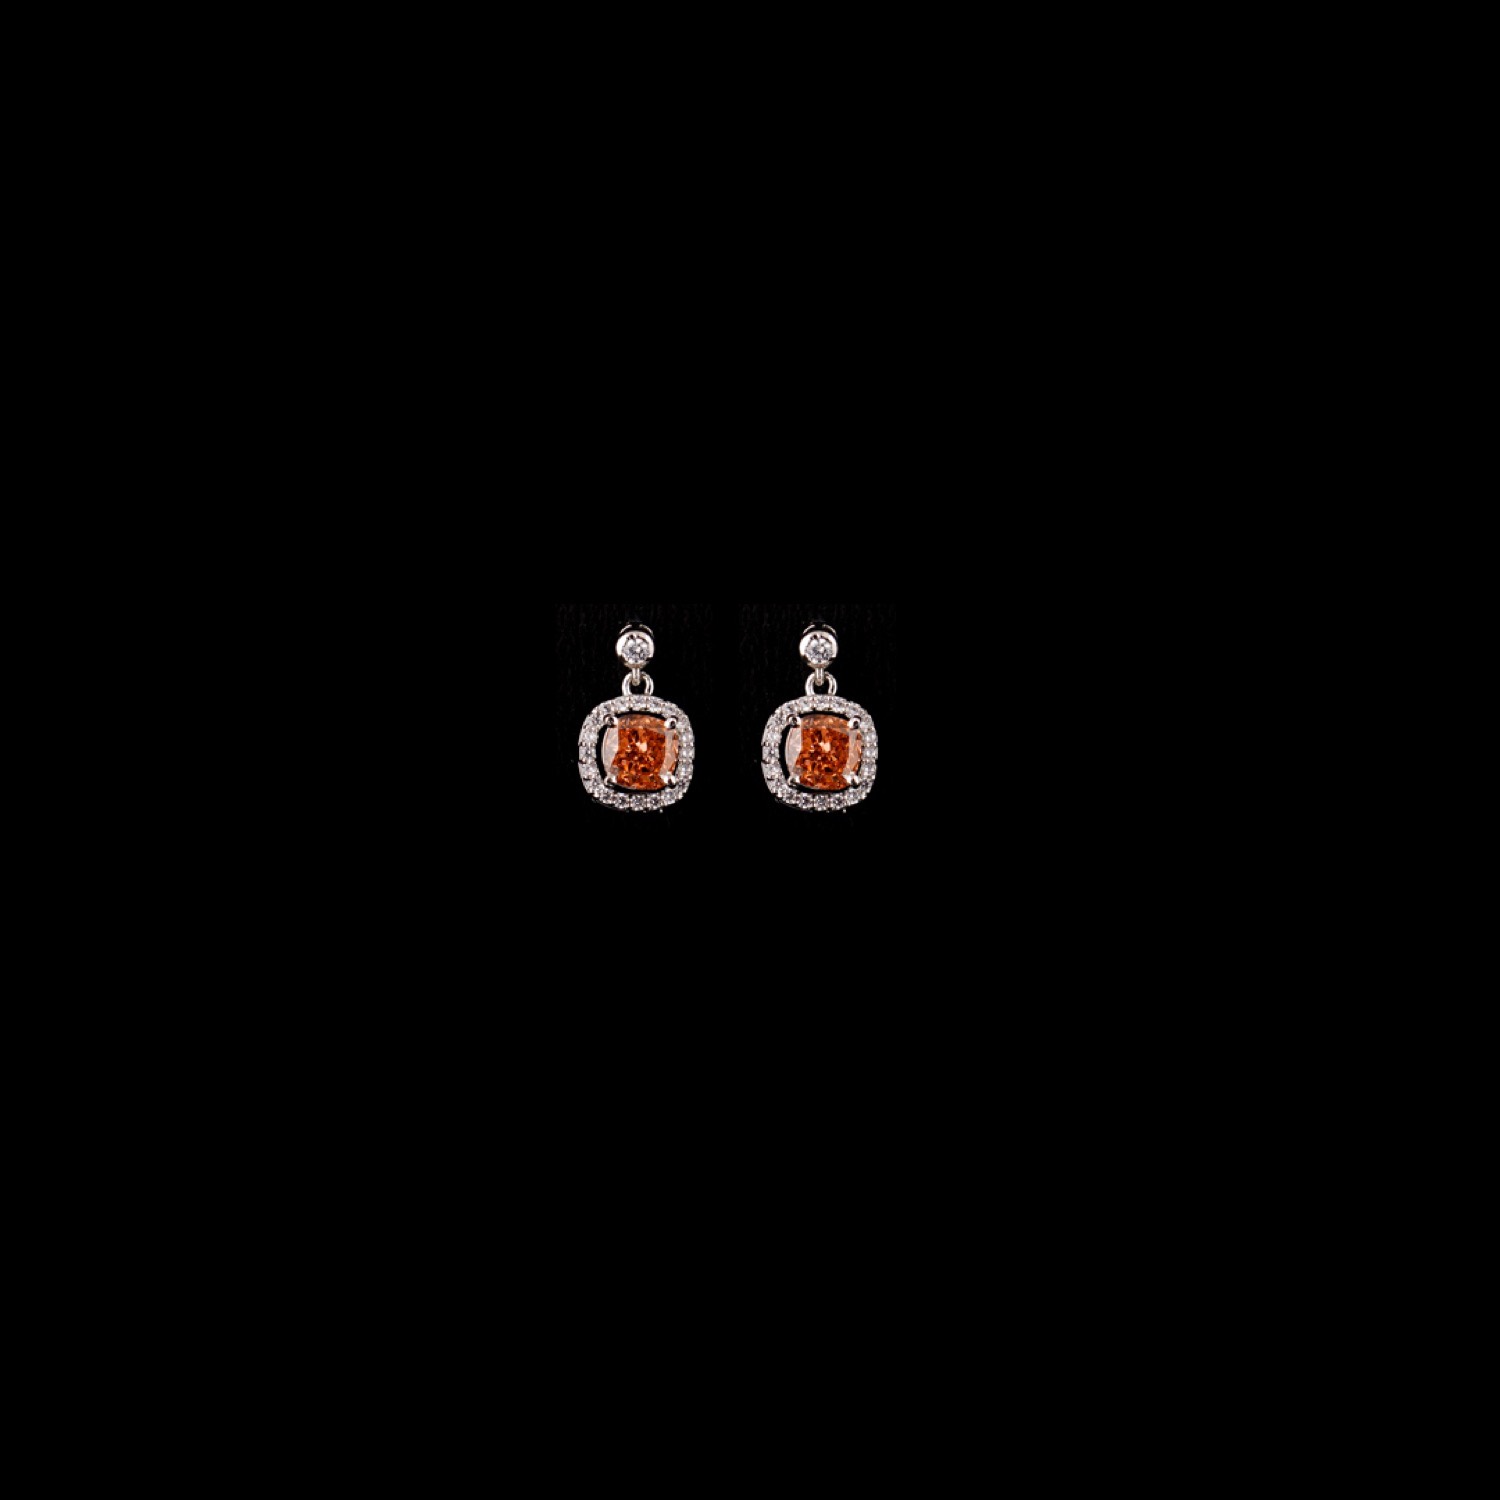 varam_earrings_102022_cushion_cut_orange_stone_dangler_silver_earrings-1